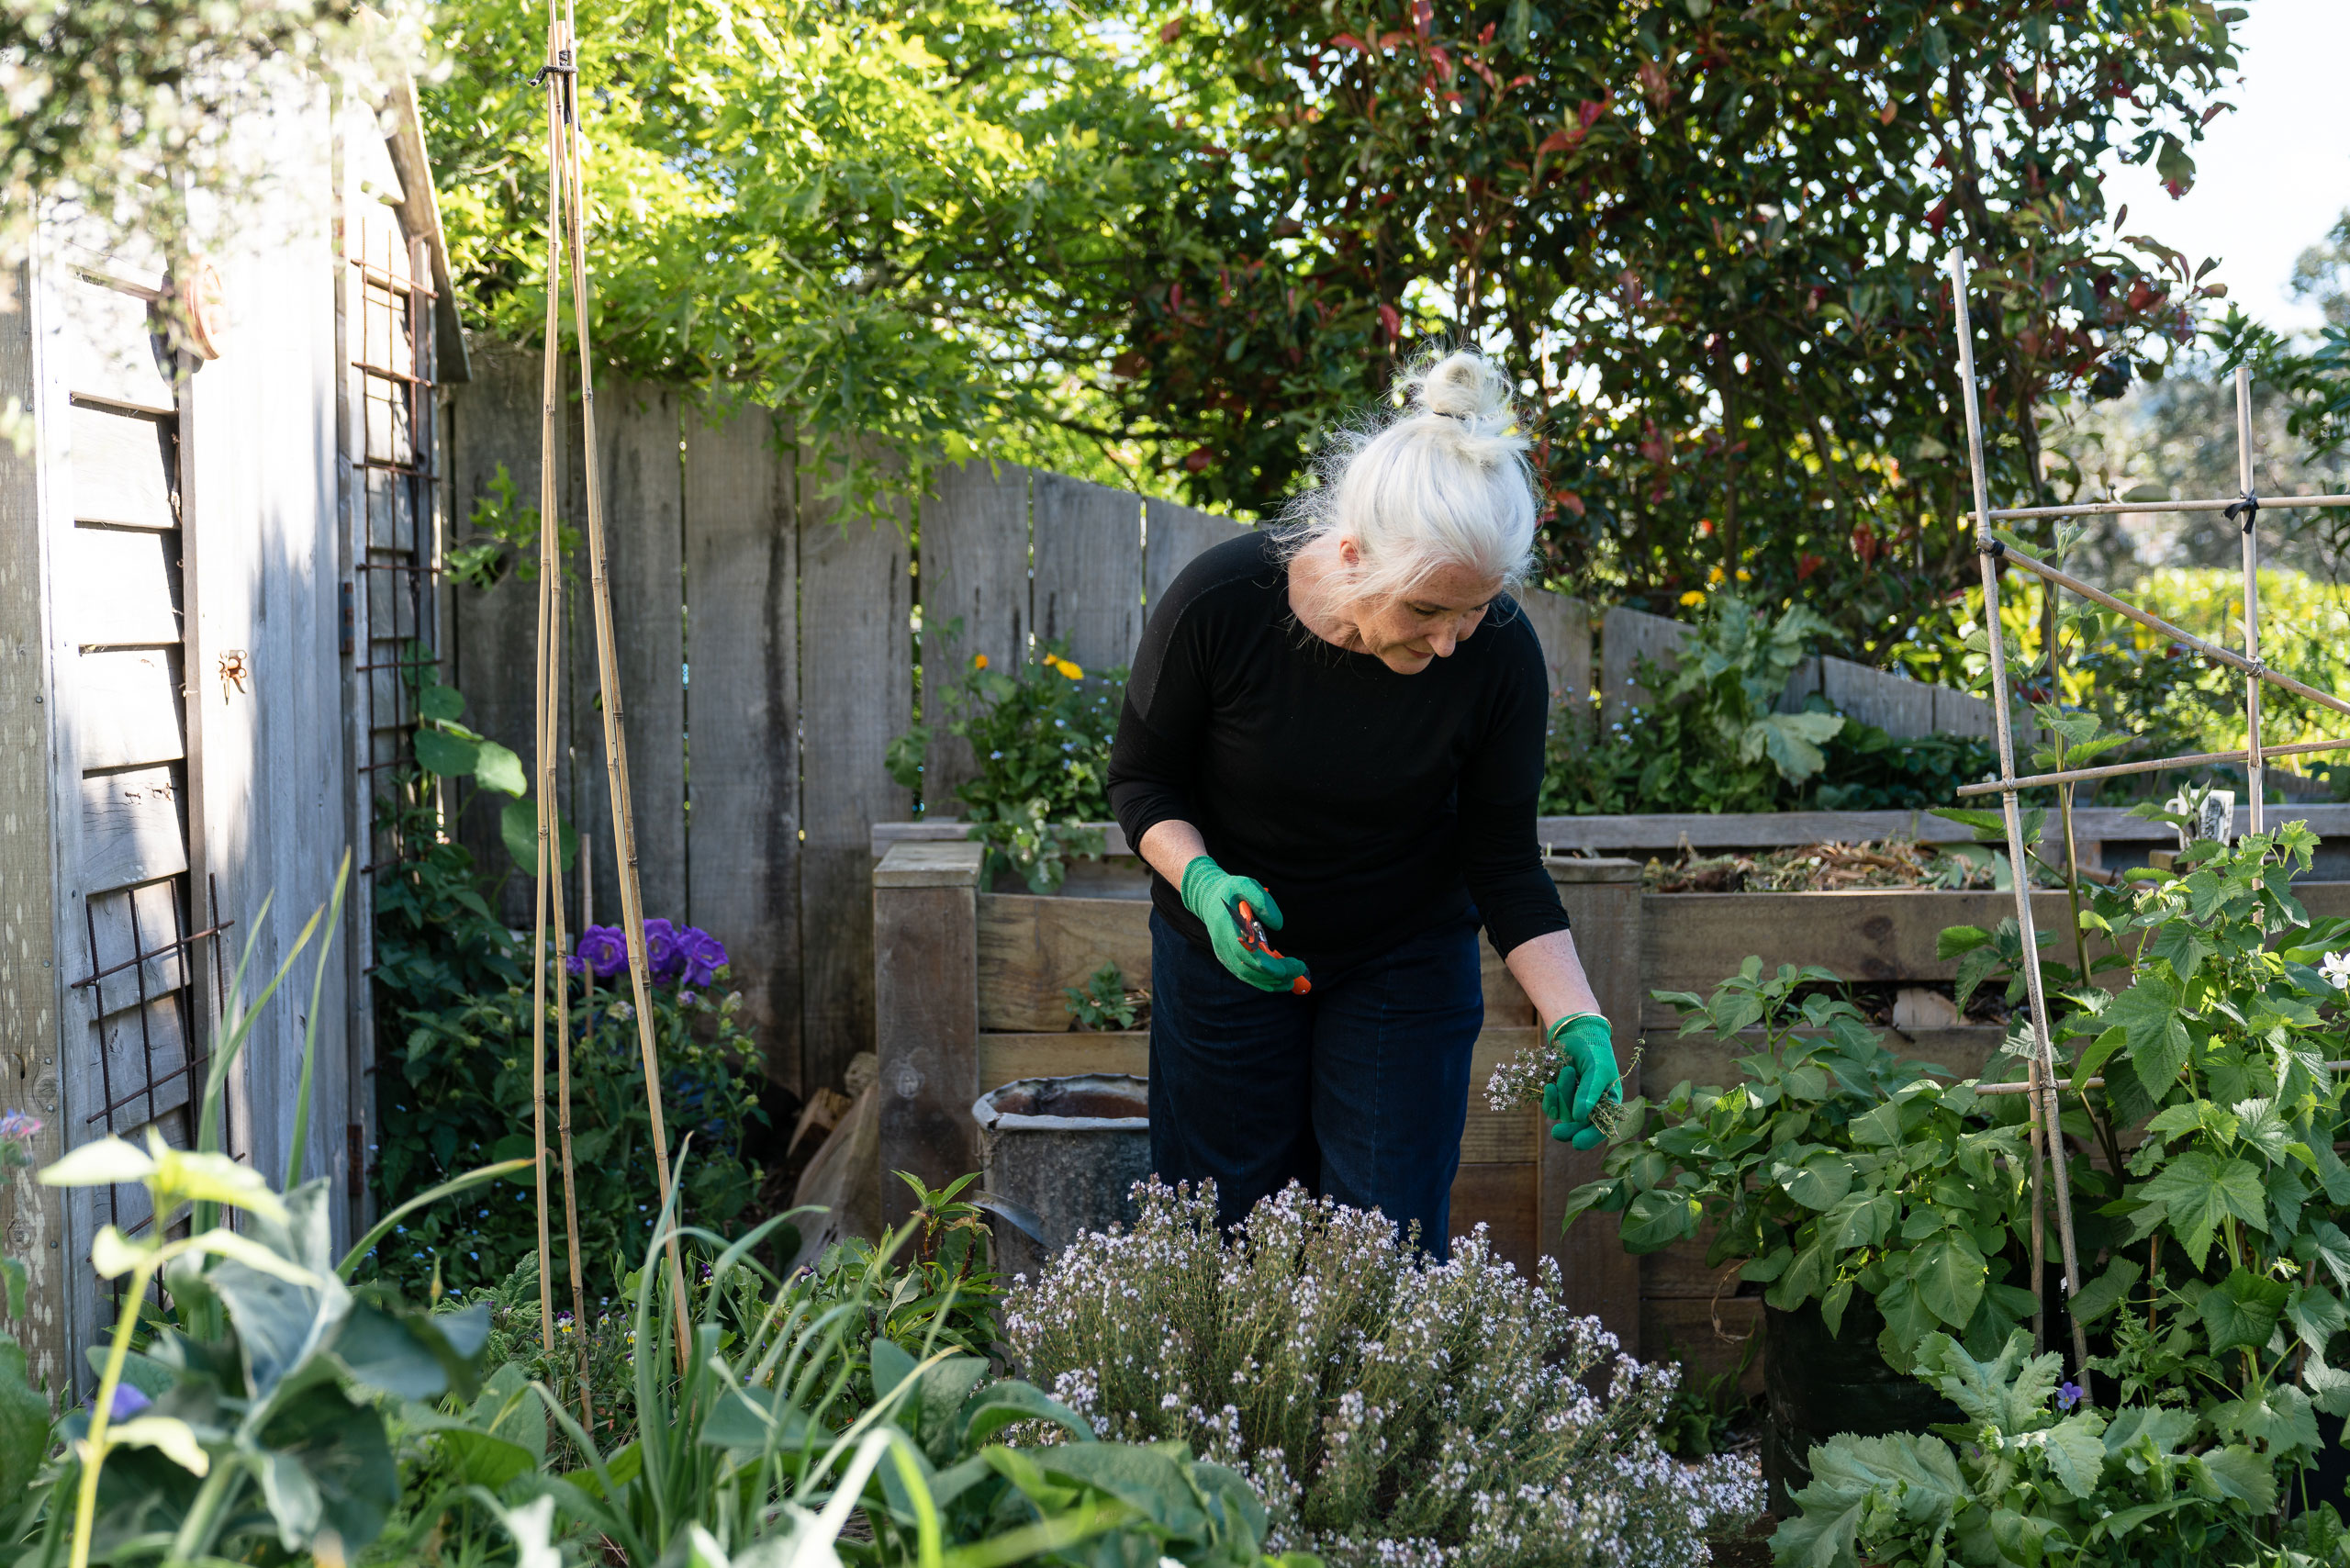 Anne tending to her backyard garden.